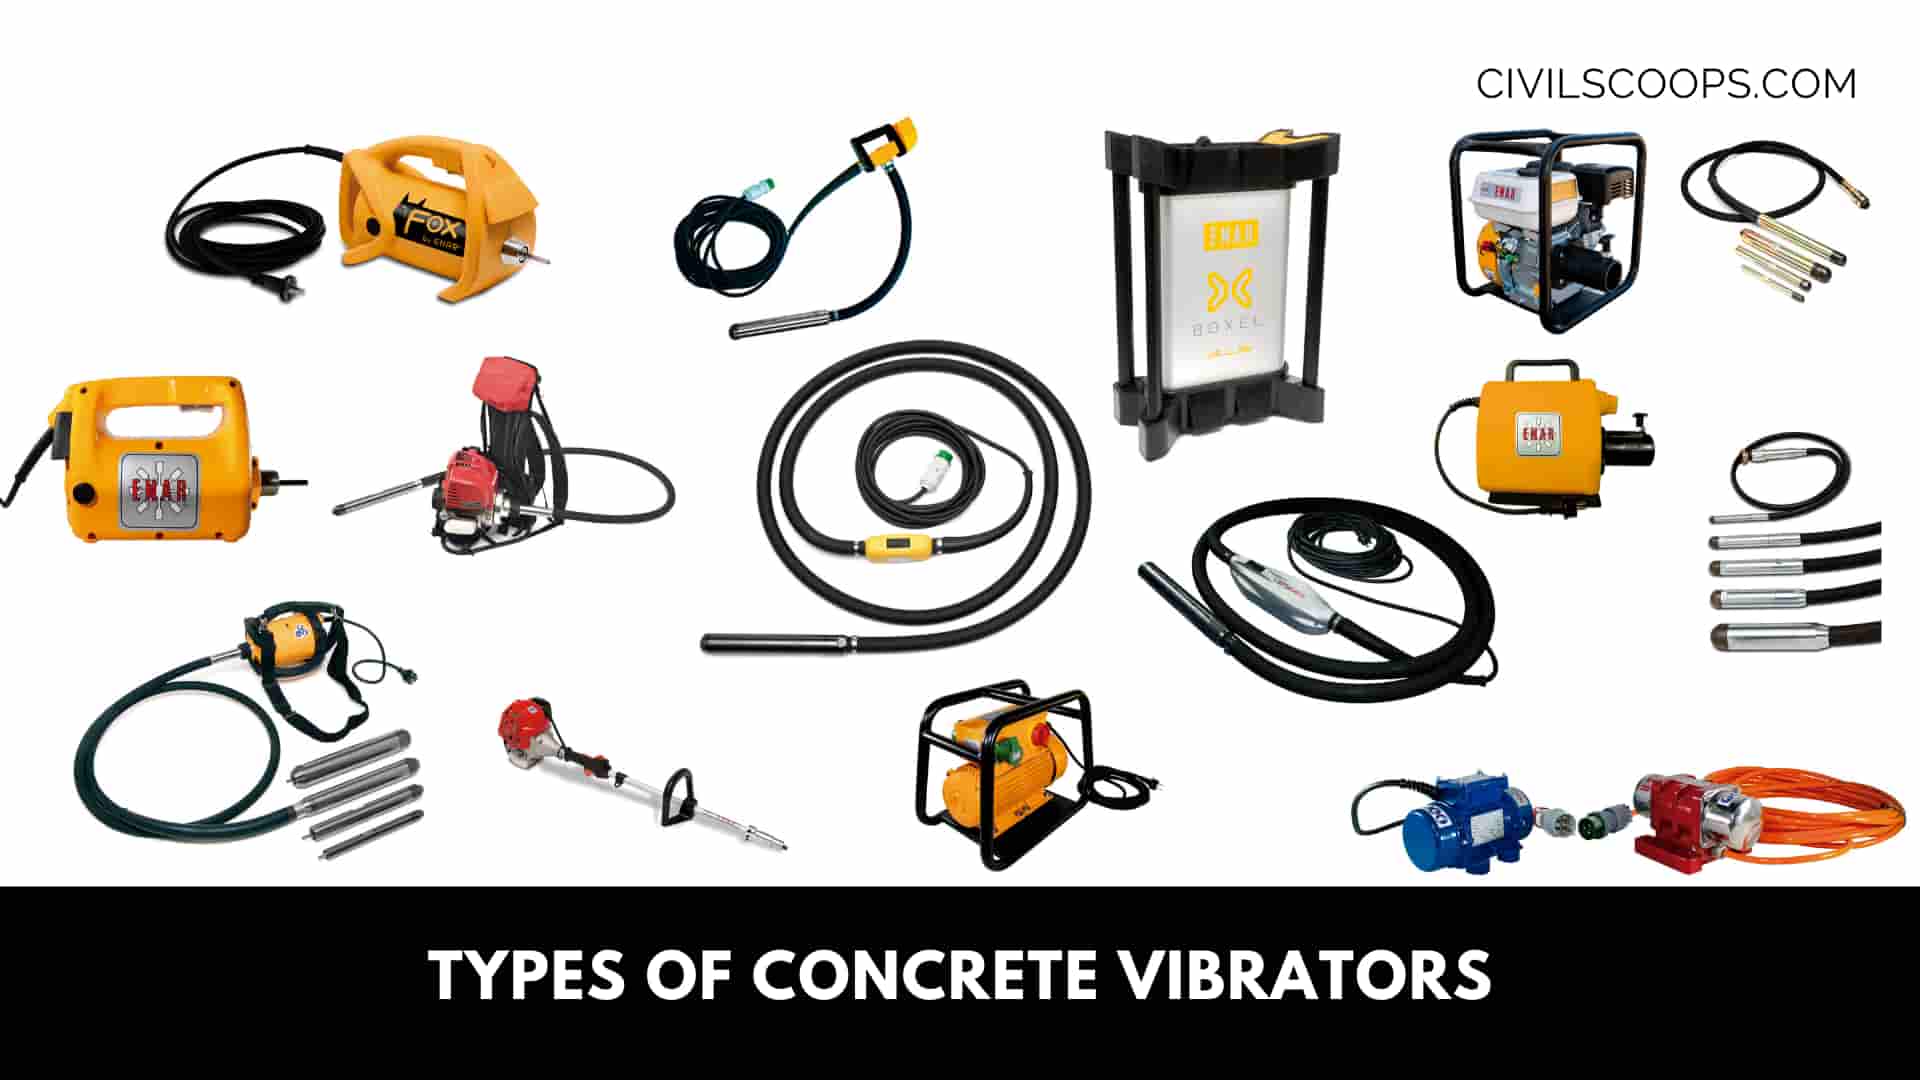 Types of Concrete vibrators